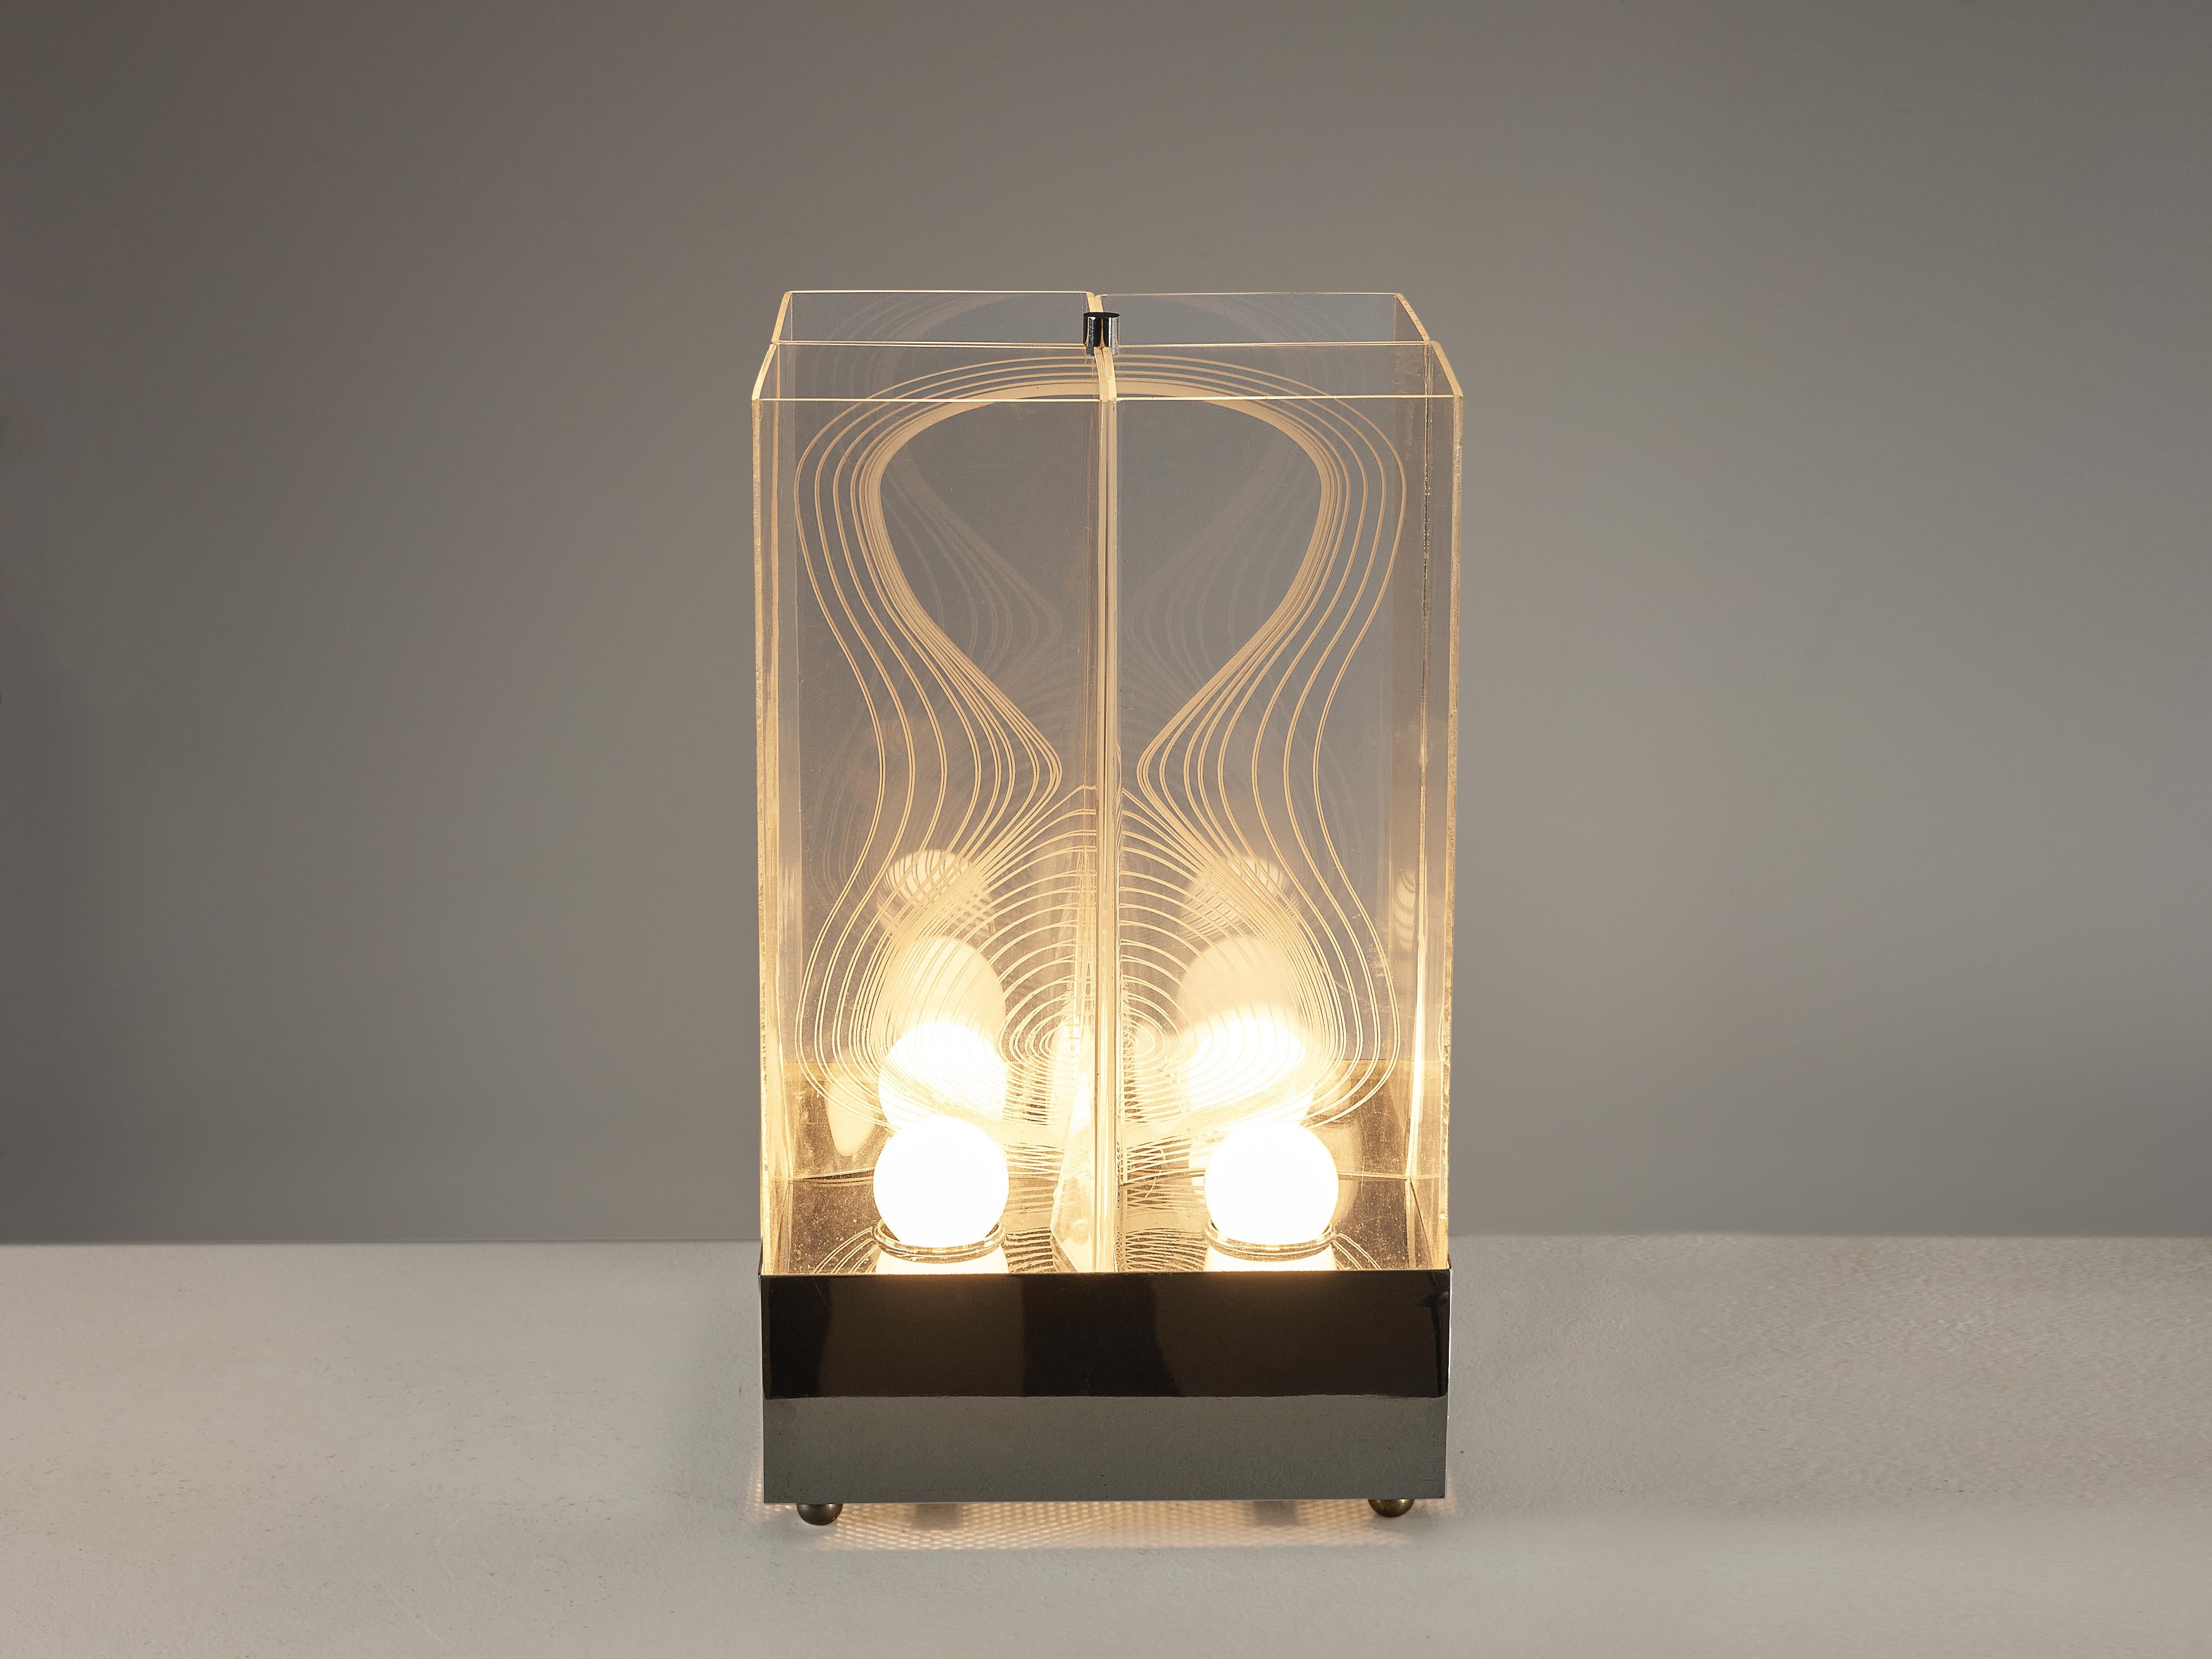 Italian Studio Salvatori for Nucleo Sormani Rare Prototype 'Model 4 ' Table Lamp 